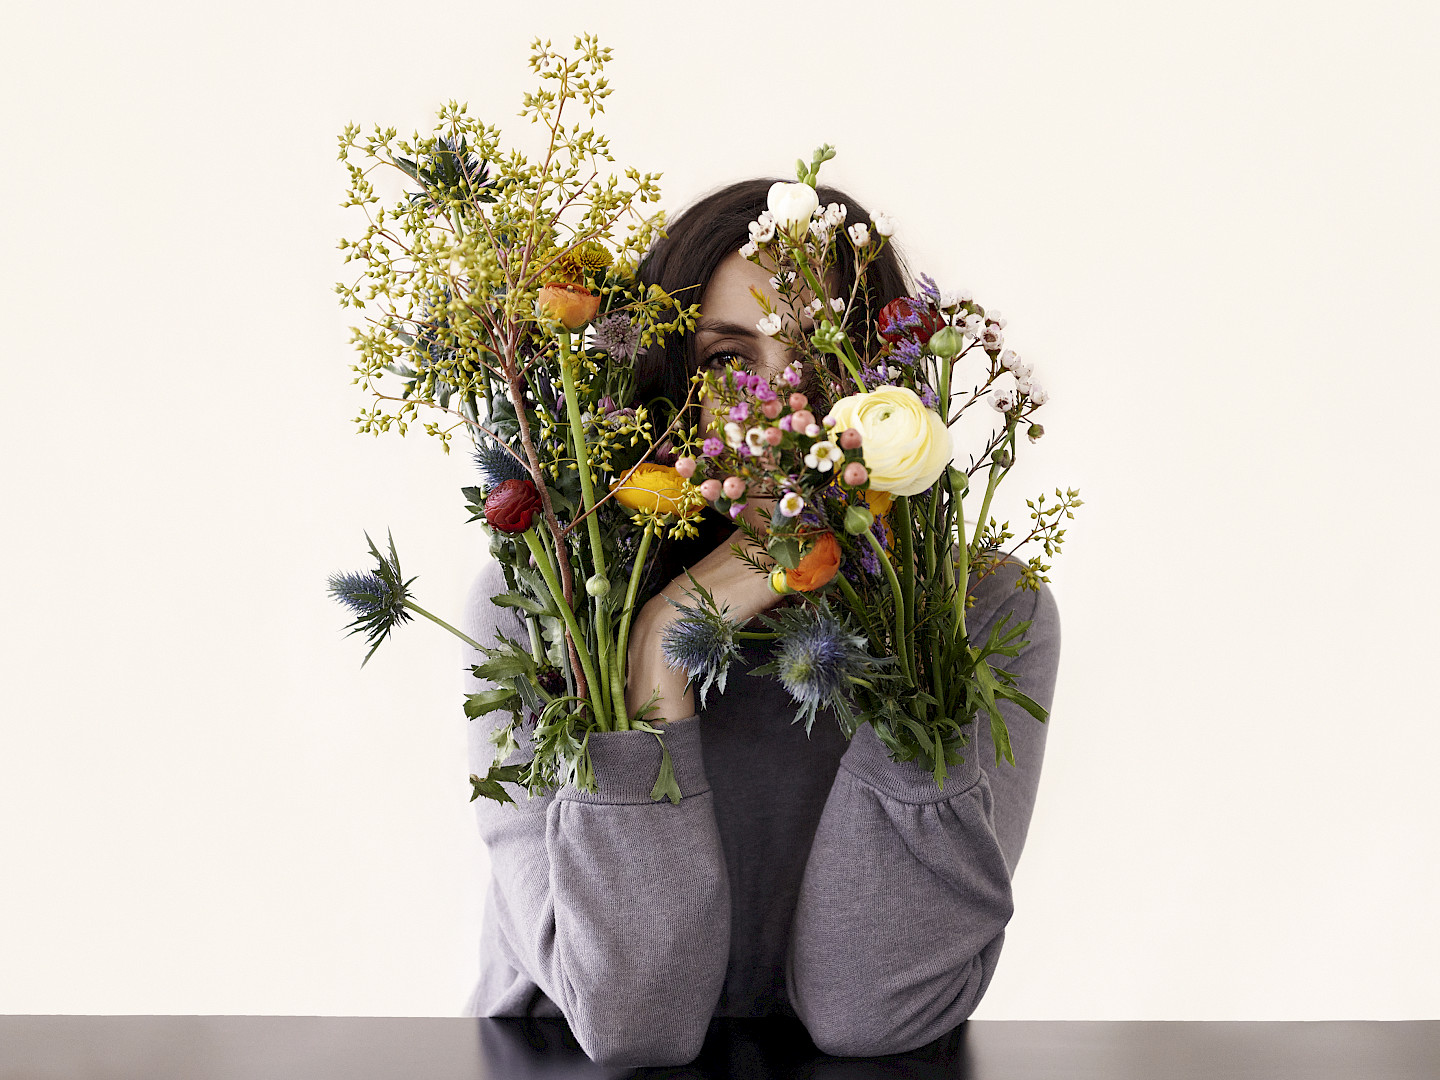 Olivia El Sayed - "flowery wordis"